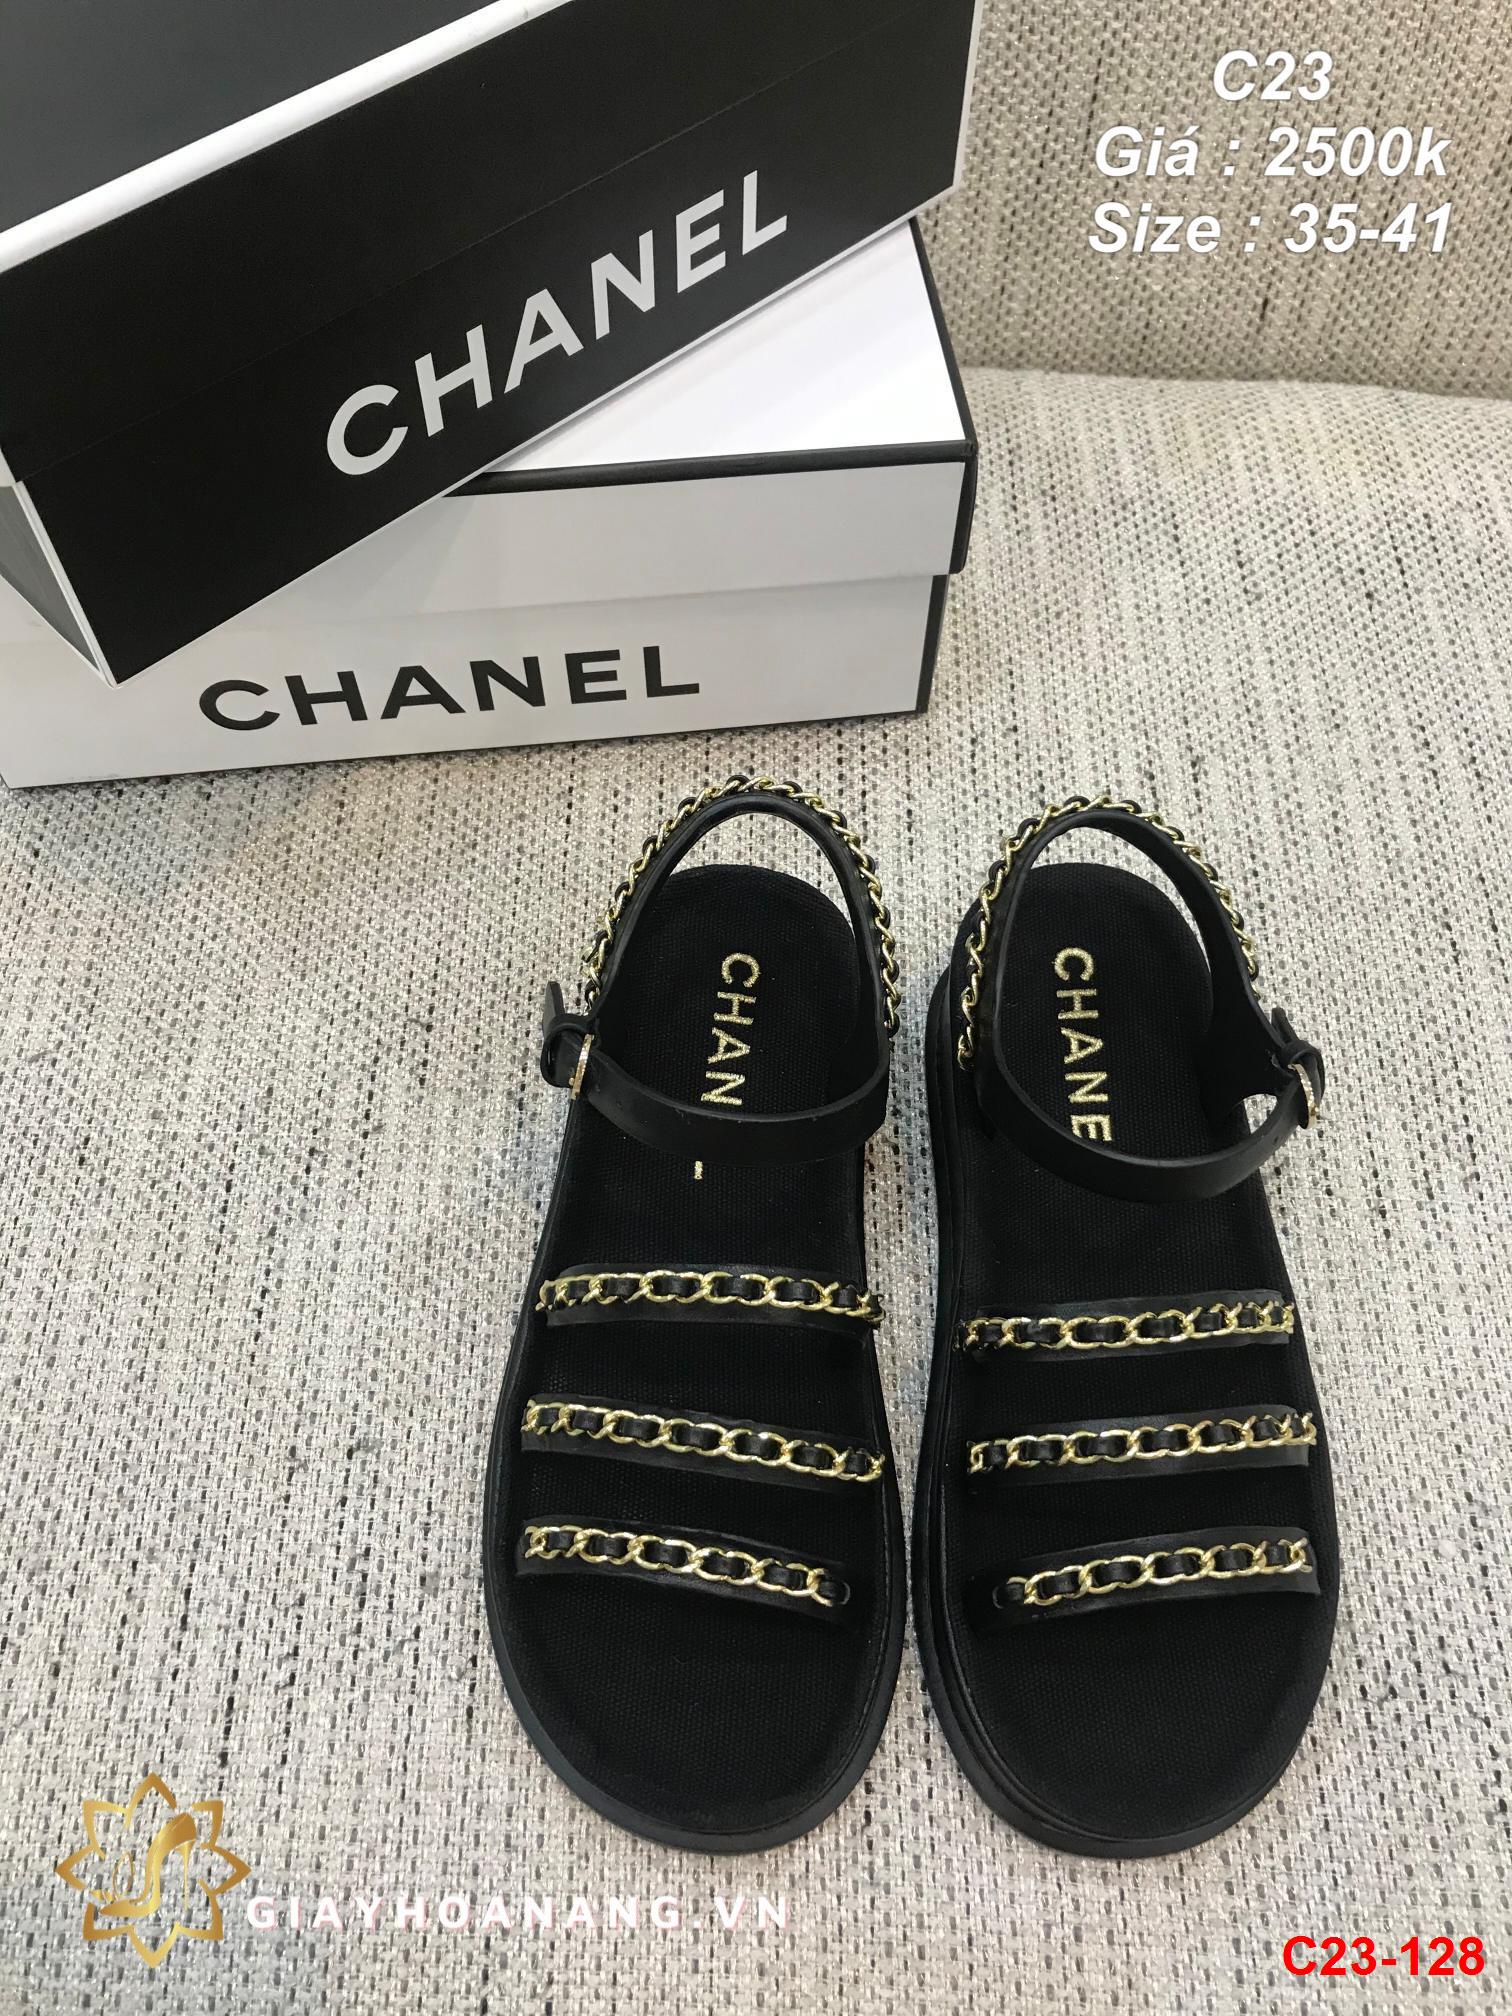 C23-128 Chanel sandal siêu cấp